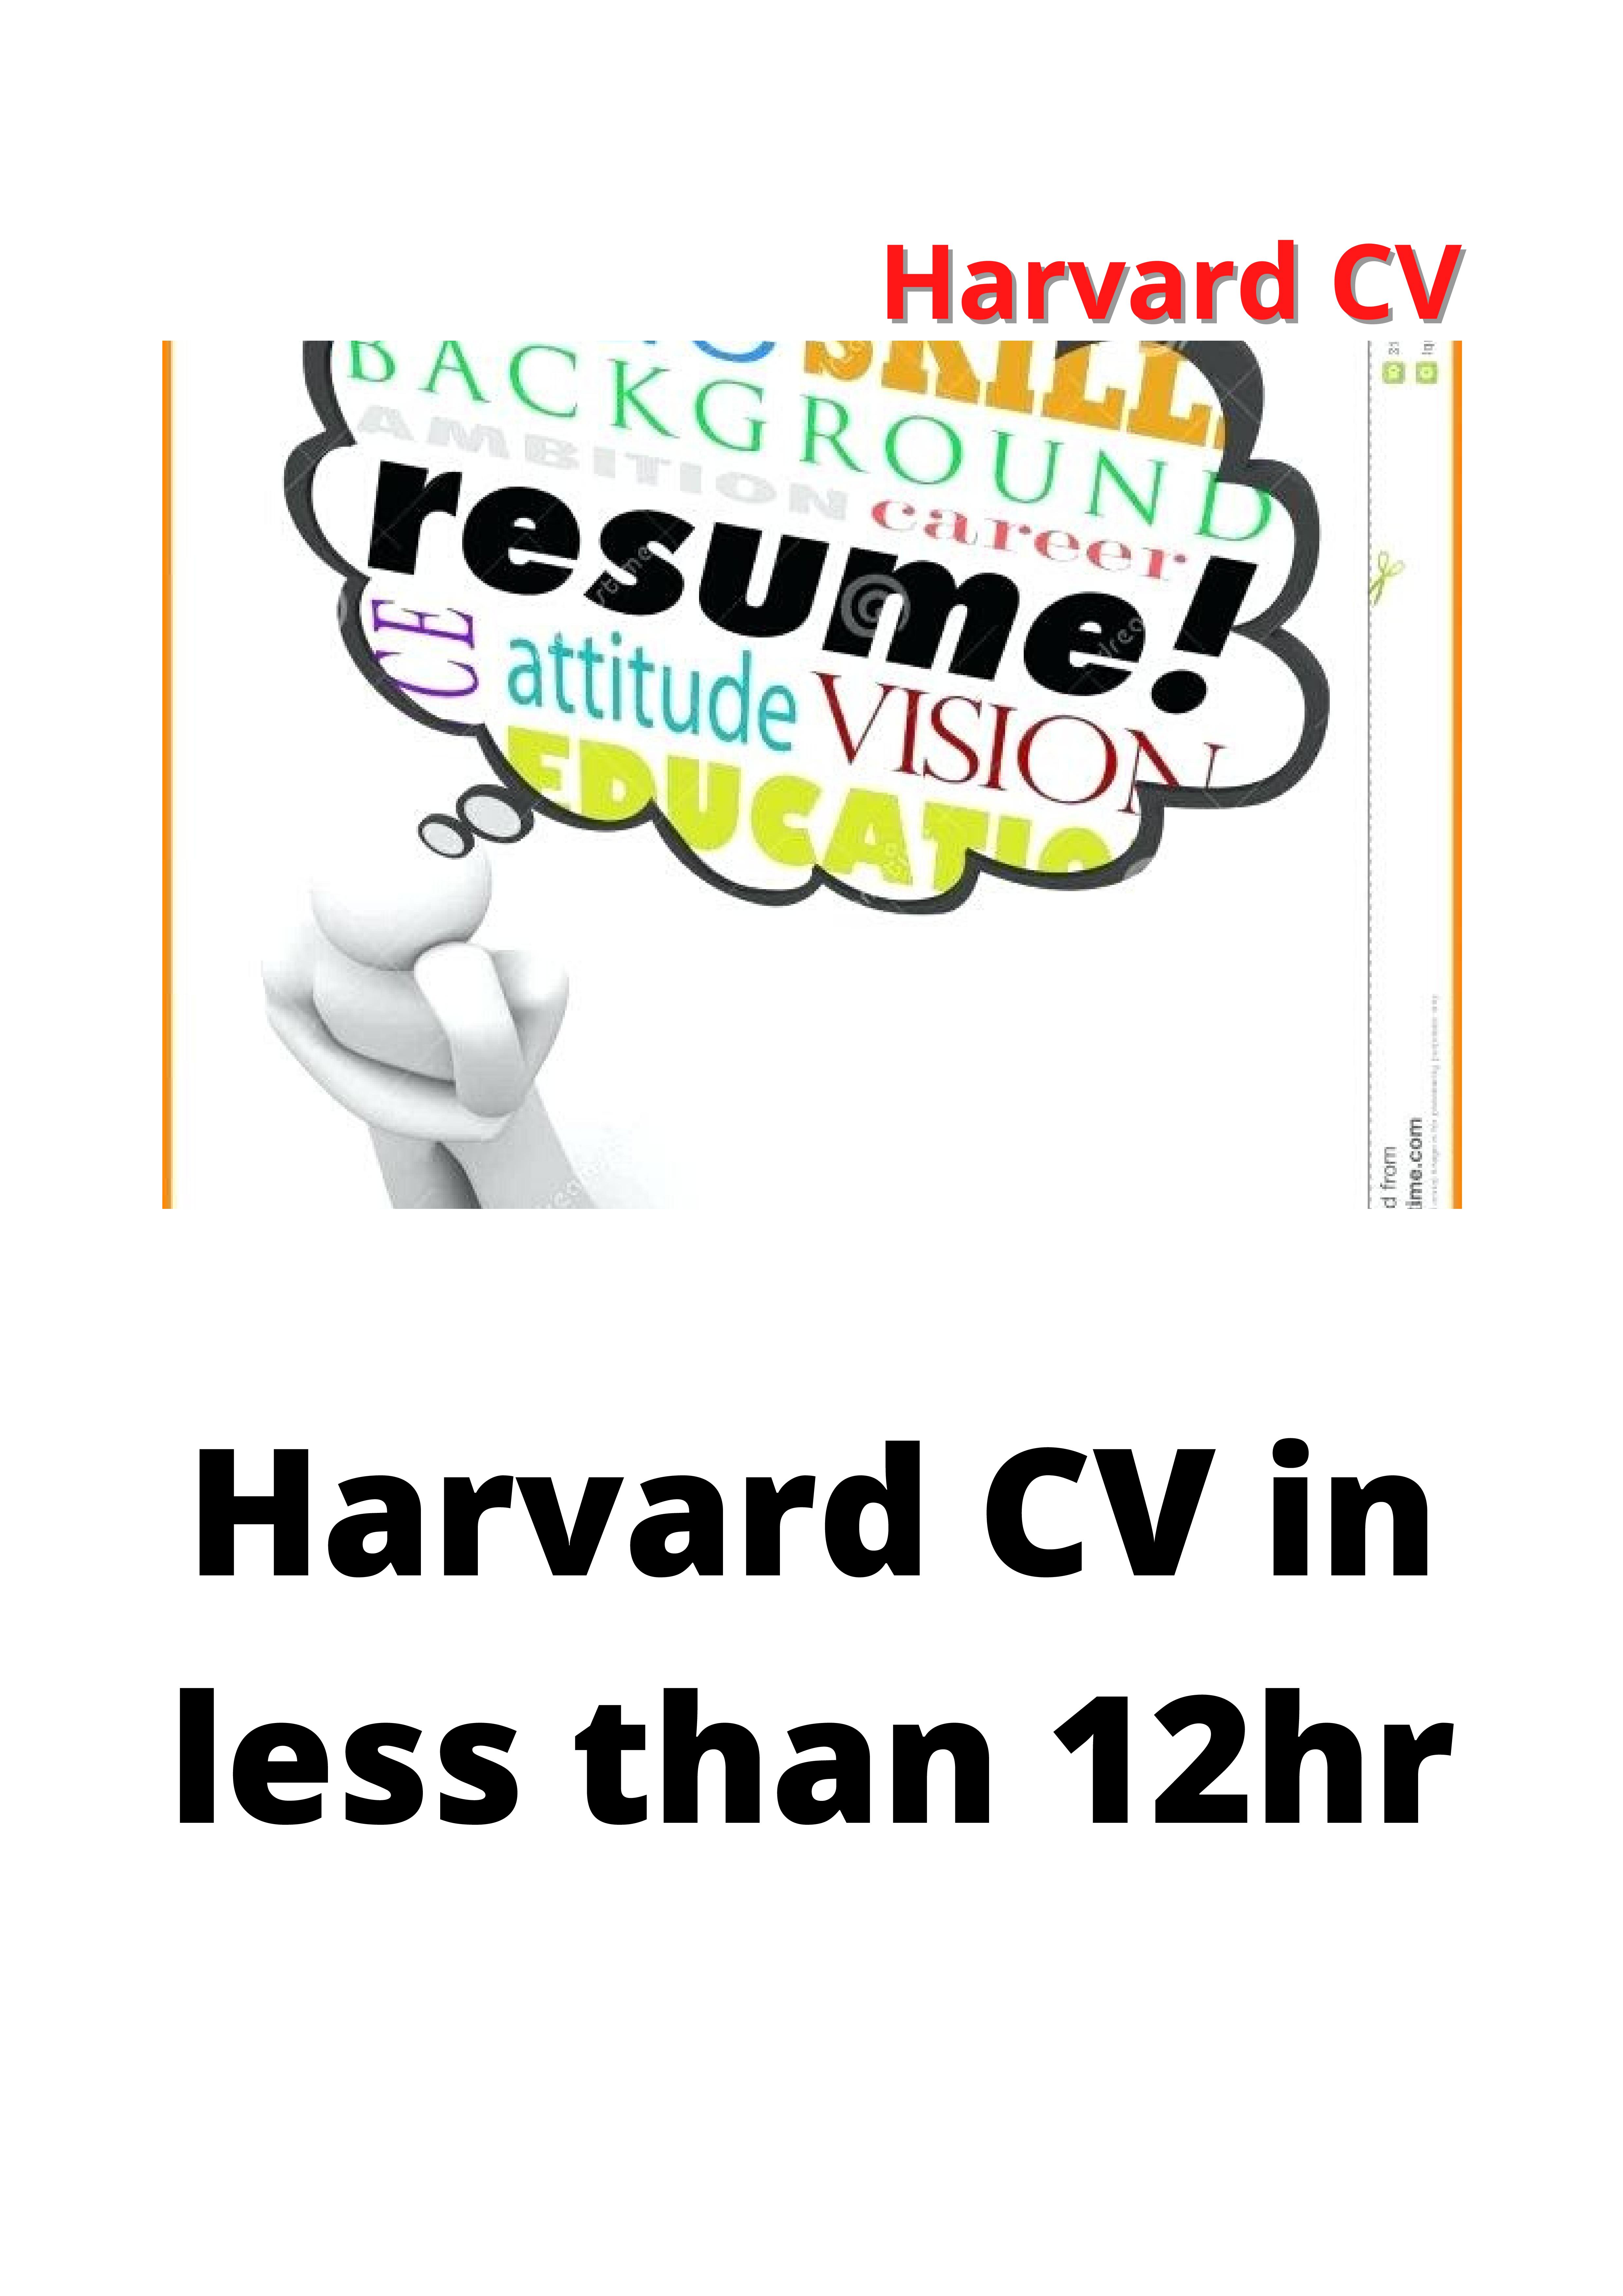 Harvard resume